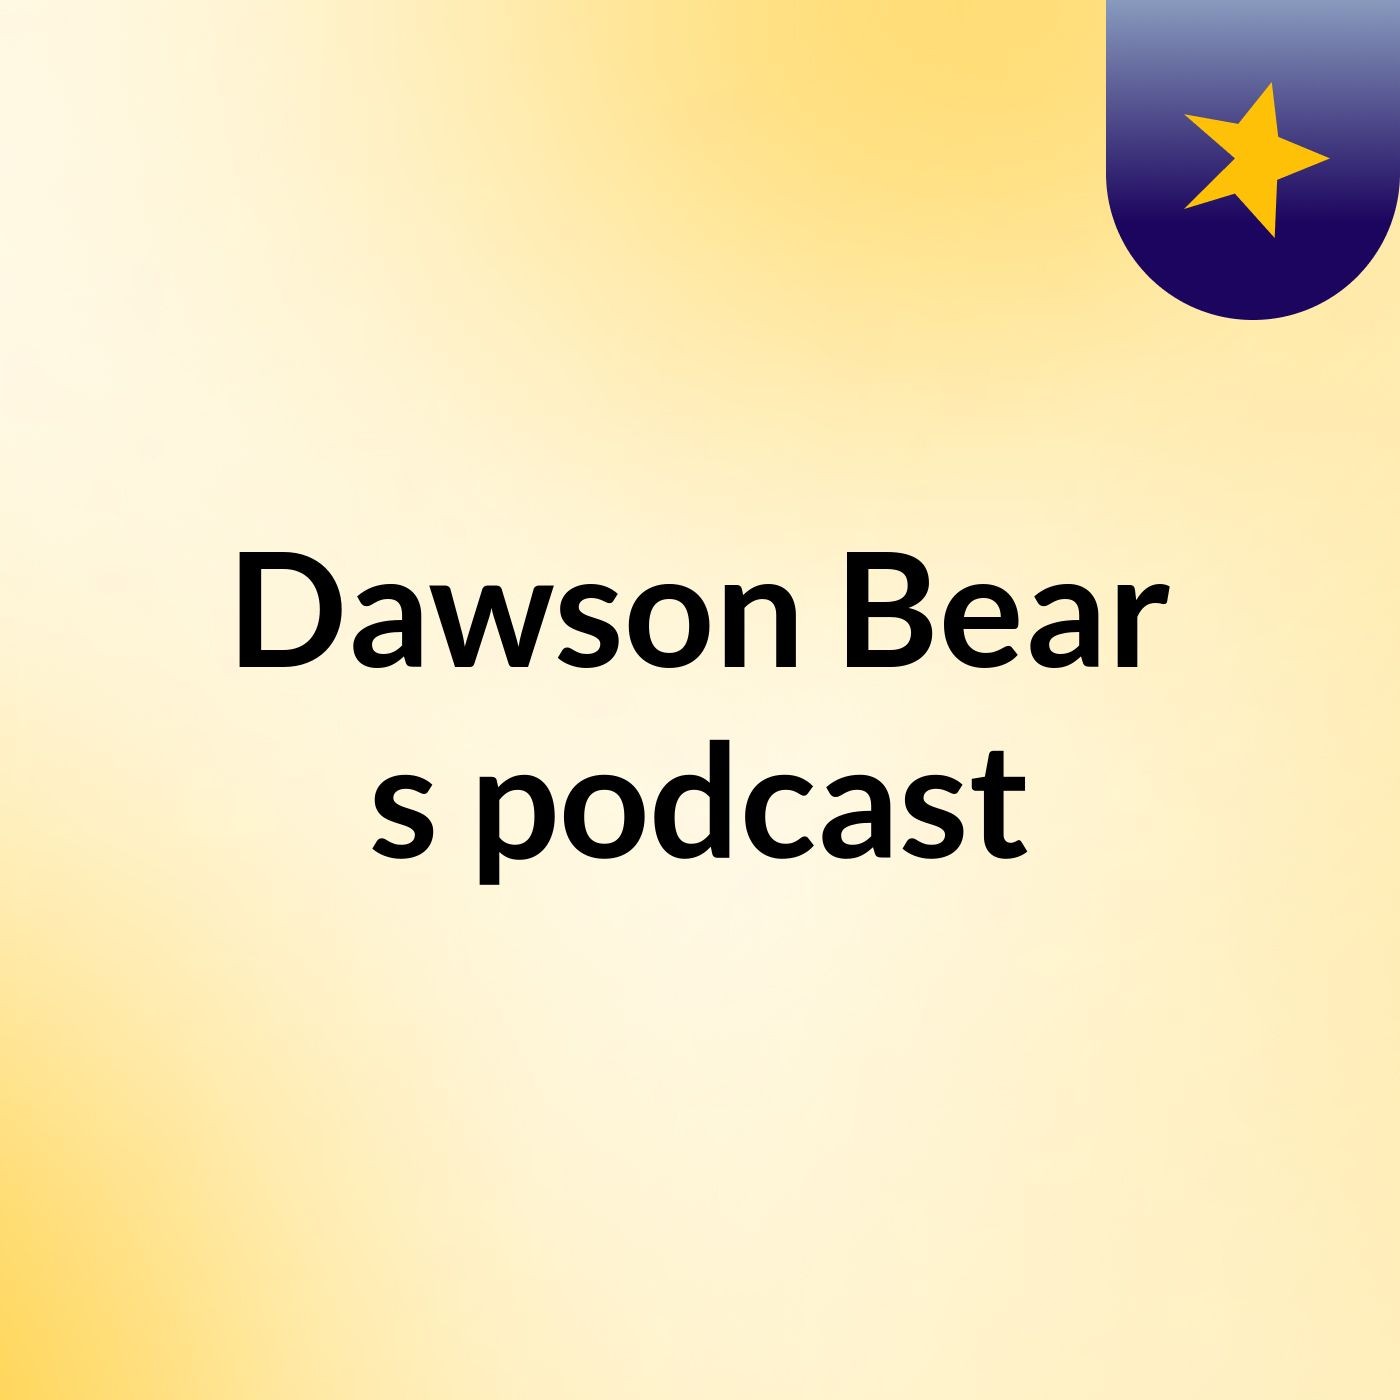 Dawson Bear's podcast